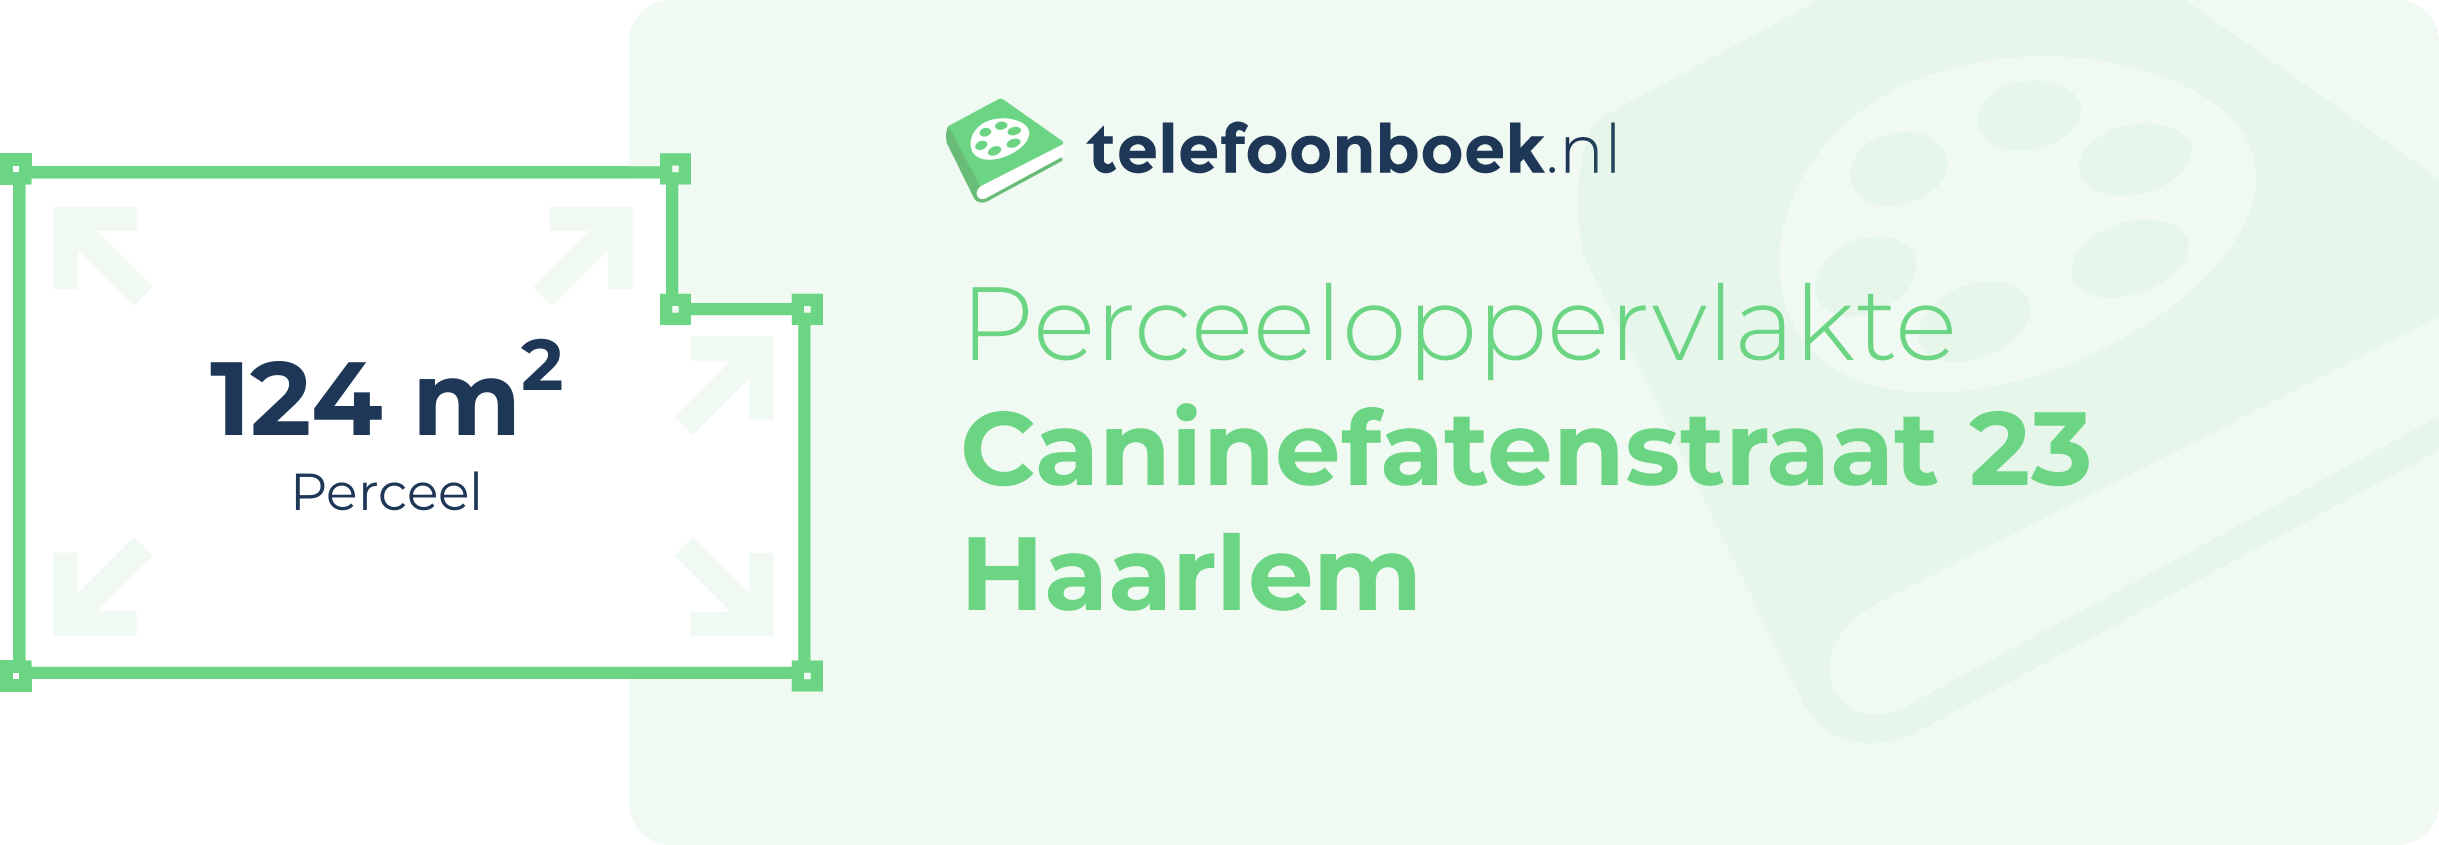 Perceeloppervlakte Caninefatenstraat 23 Haarlem